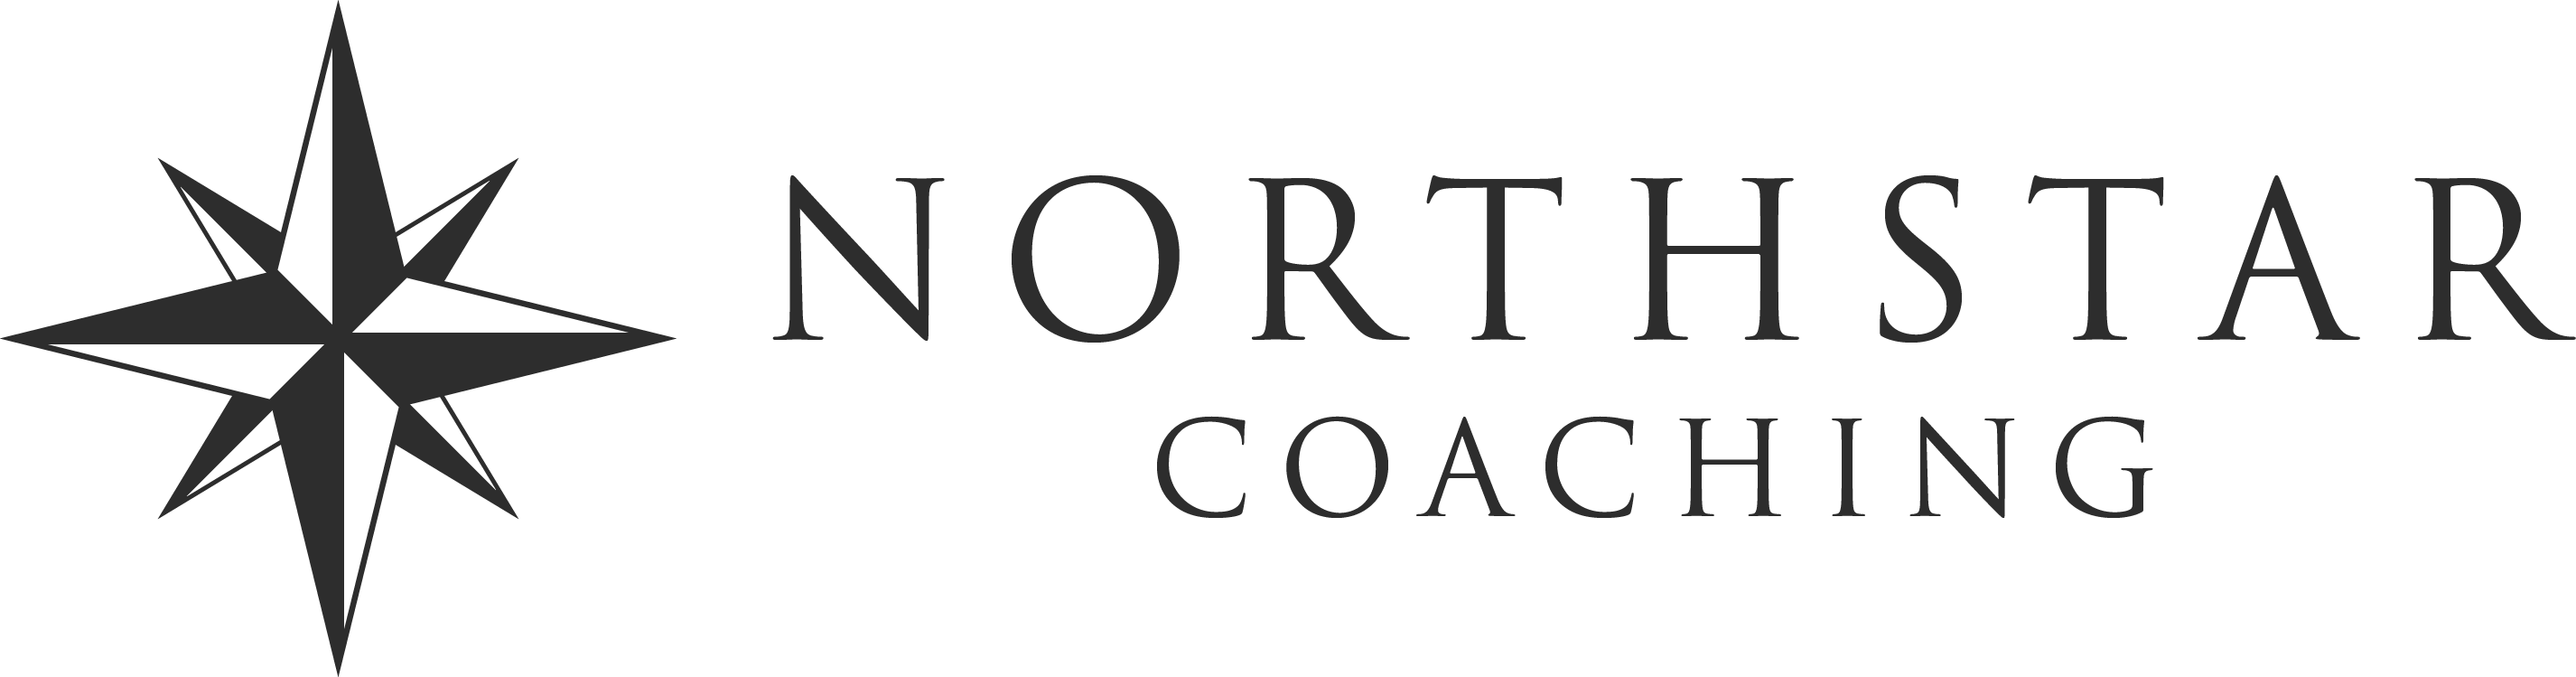 Northstar Coaching